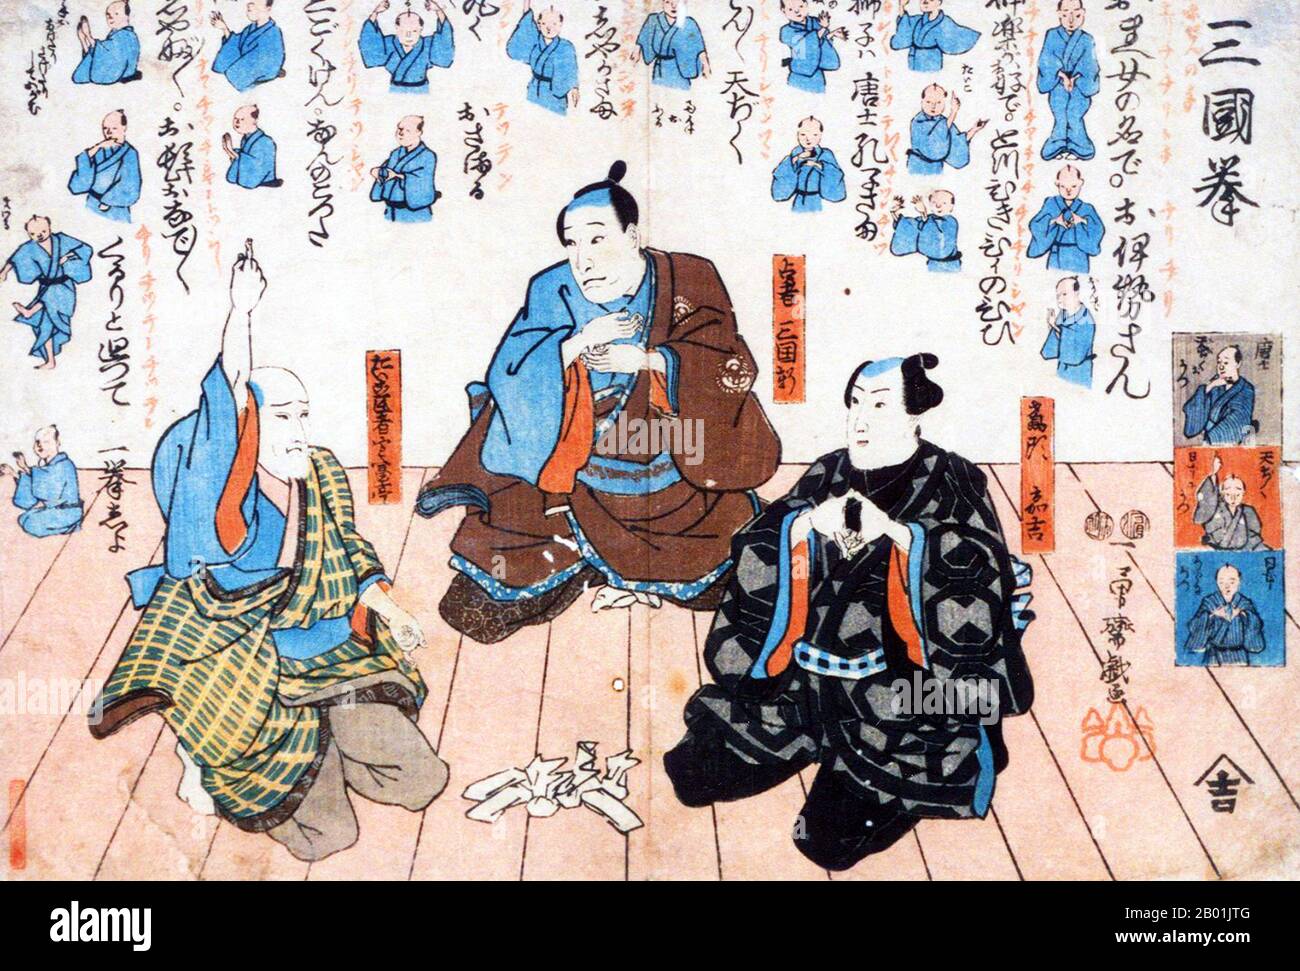 Japan: The actors Nakamura Utaemon IV, Ichikawa Kuzô II and Matsumoto Kôshirô VI playing the game Ken. Ukiyo-e woodblock print by Utagawa Kuniyoshi (1 January 1797 - 14 April 1862), 1849.  Utagawa Kuniyoshi was one of the last great masters of the Japanese ukiyo-e style of woodblock prints and painting. He is associated with the Utagawa school.  The range of Kuniyoshi's preferred subjects included many genres: landscapes, beautiful women, Kabuki actors, cats, and mythical animals. He is known for depictions of the battles of samurai and legendary heroes. Stock Photo